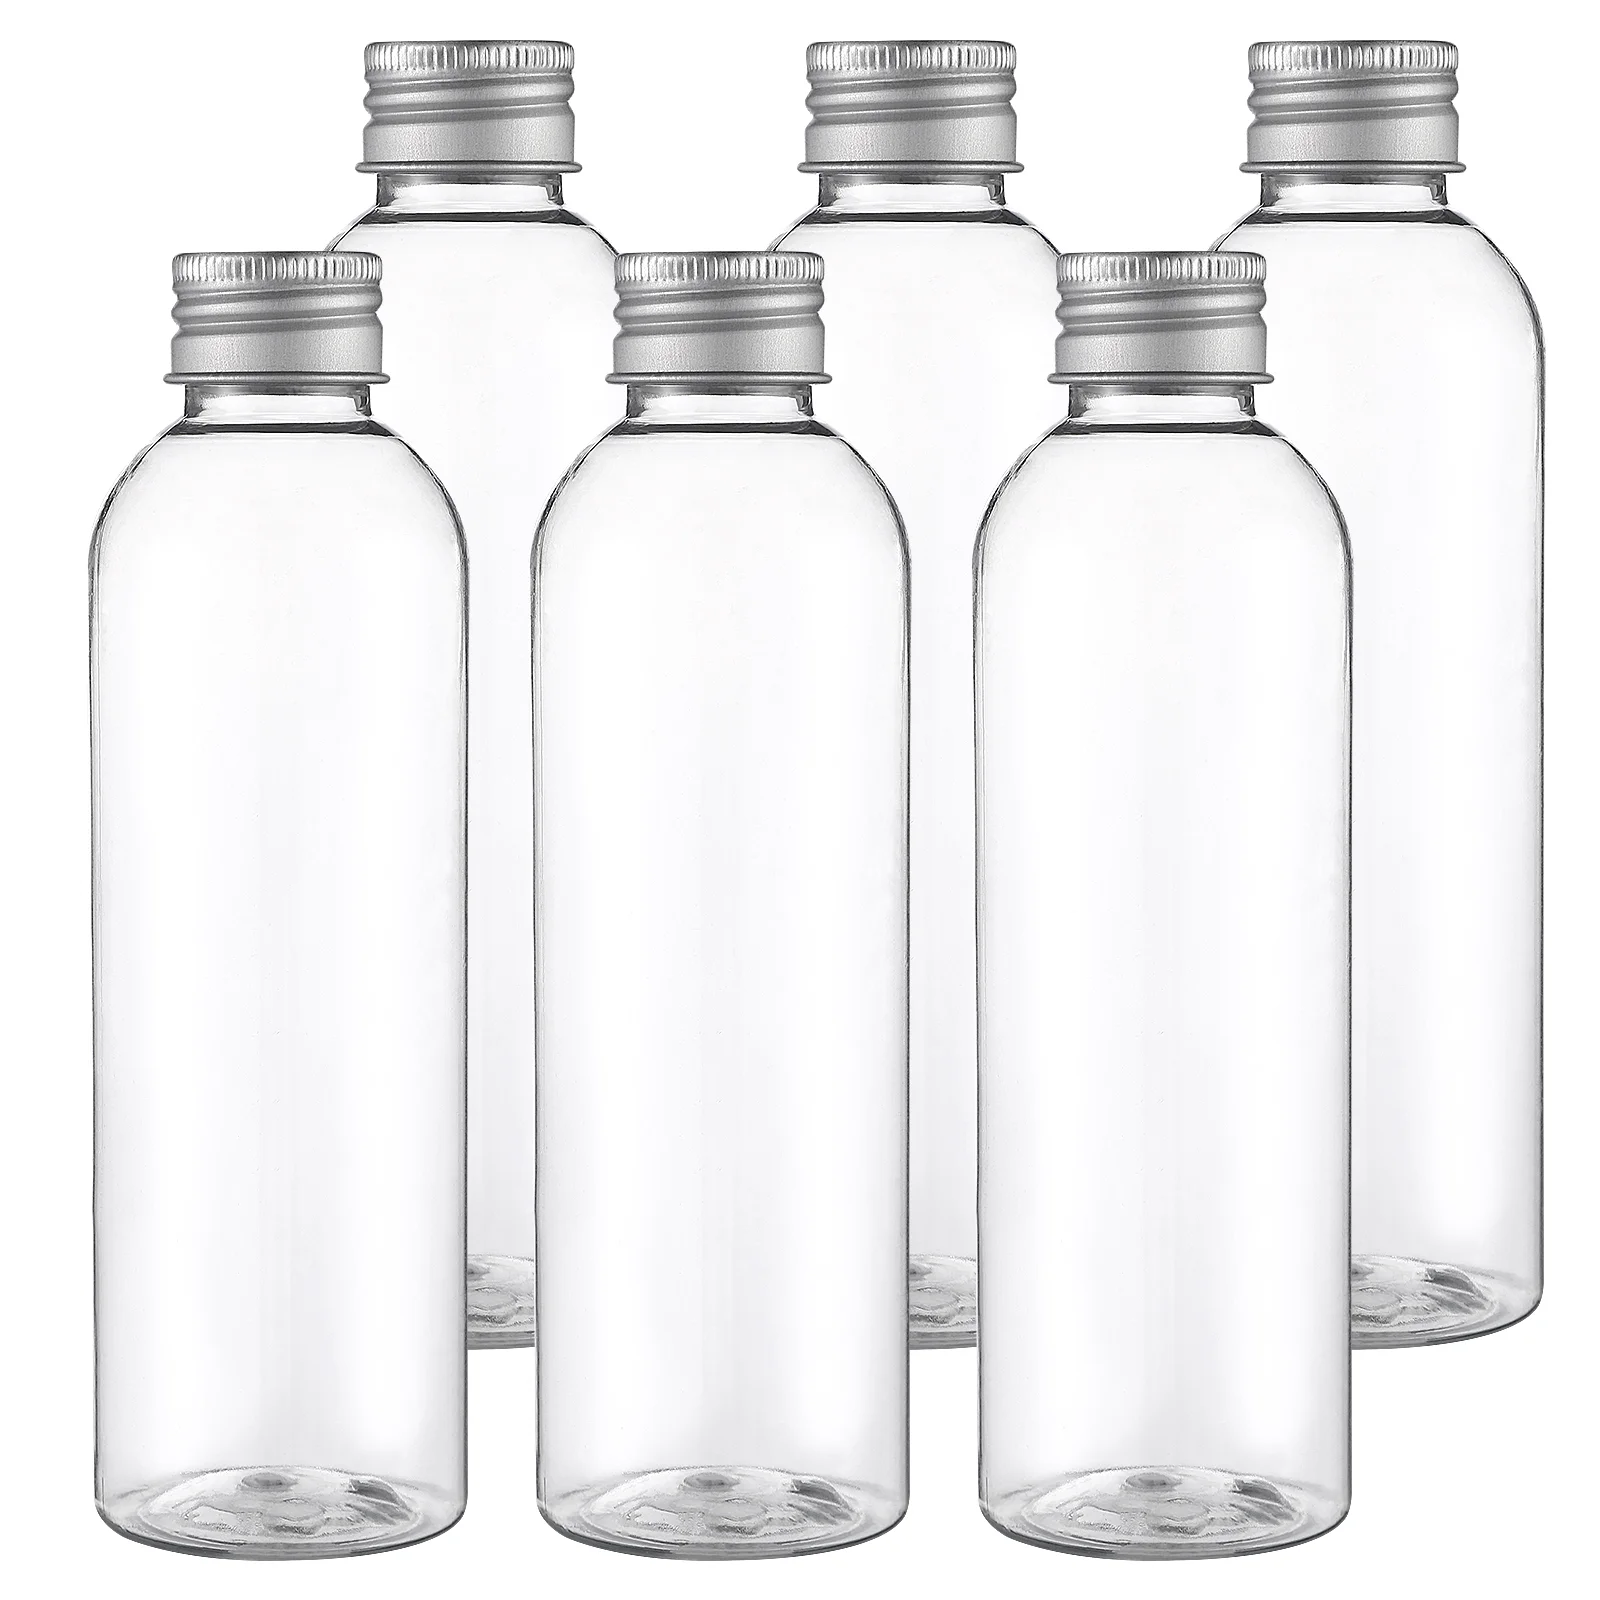 

6 Pcs Plastic Bottles Empty Liquids Caps Conditioner Travel Sample Shampoo Refillable Toiletry Traveling